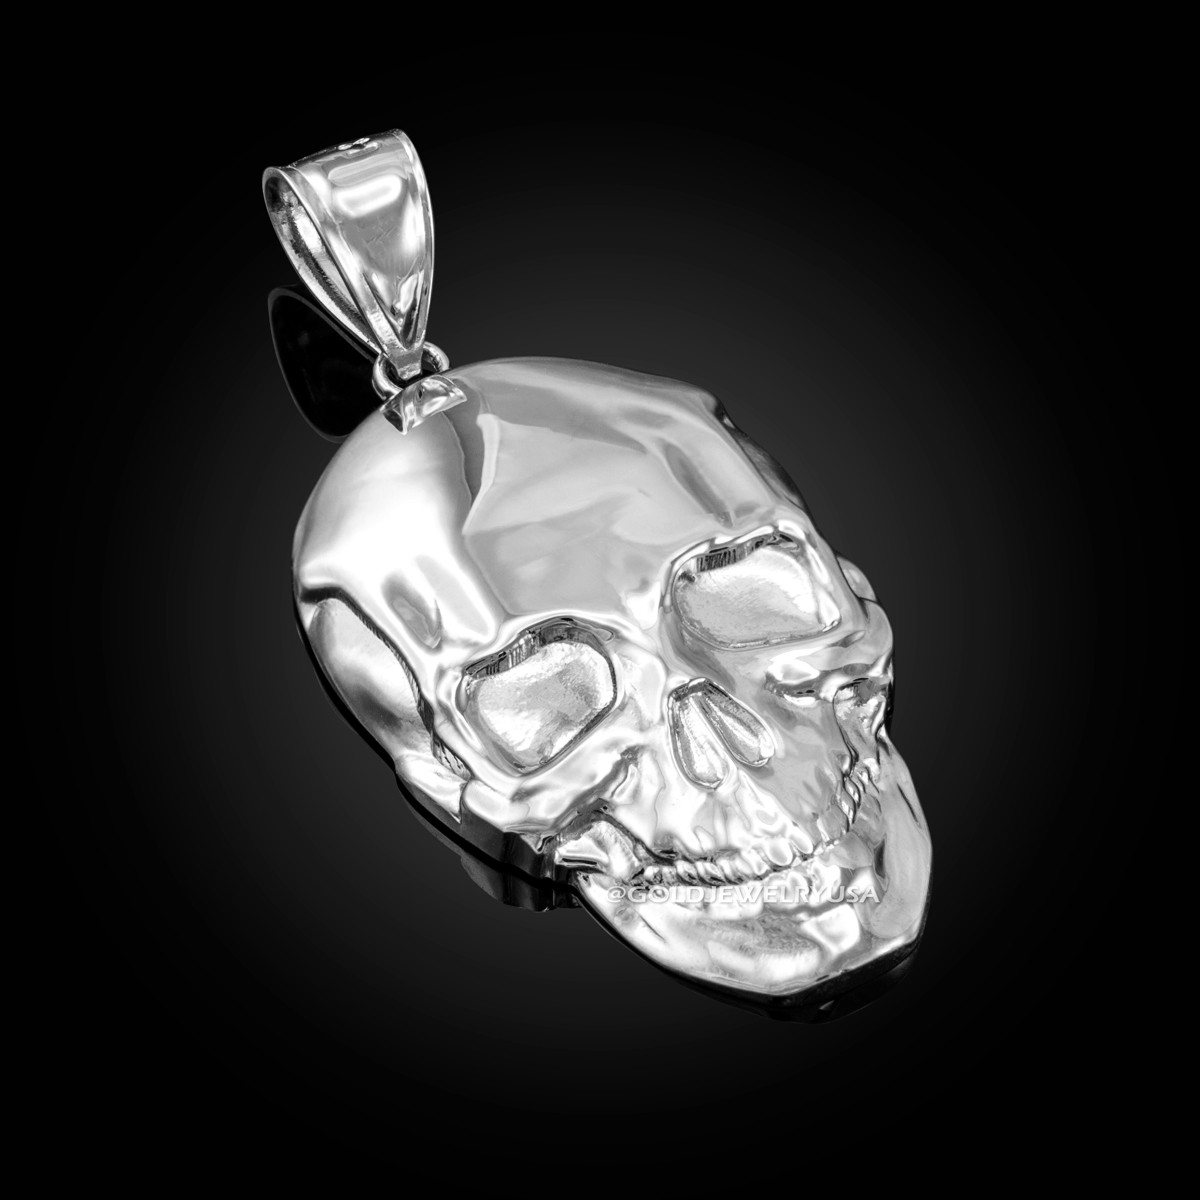 Necklace Skull Pendant Stainless Steel | Jewelry Men Skull Stainless Steel  - 316l - Aliexpress